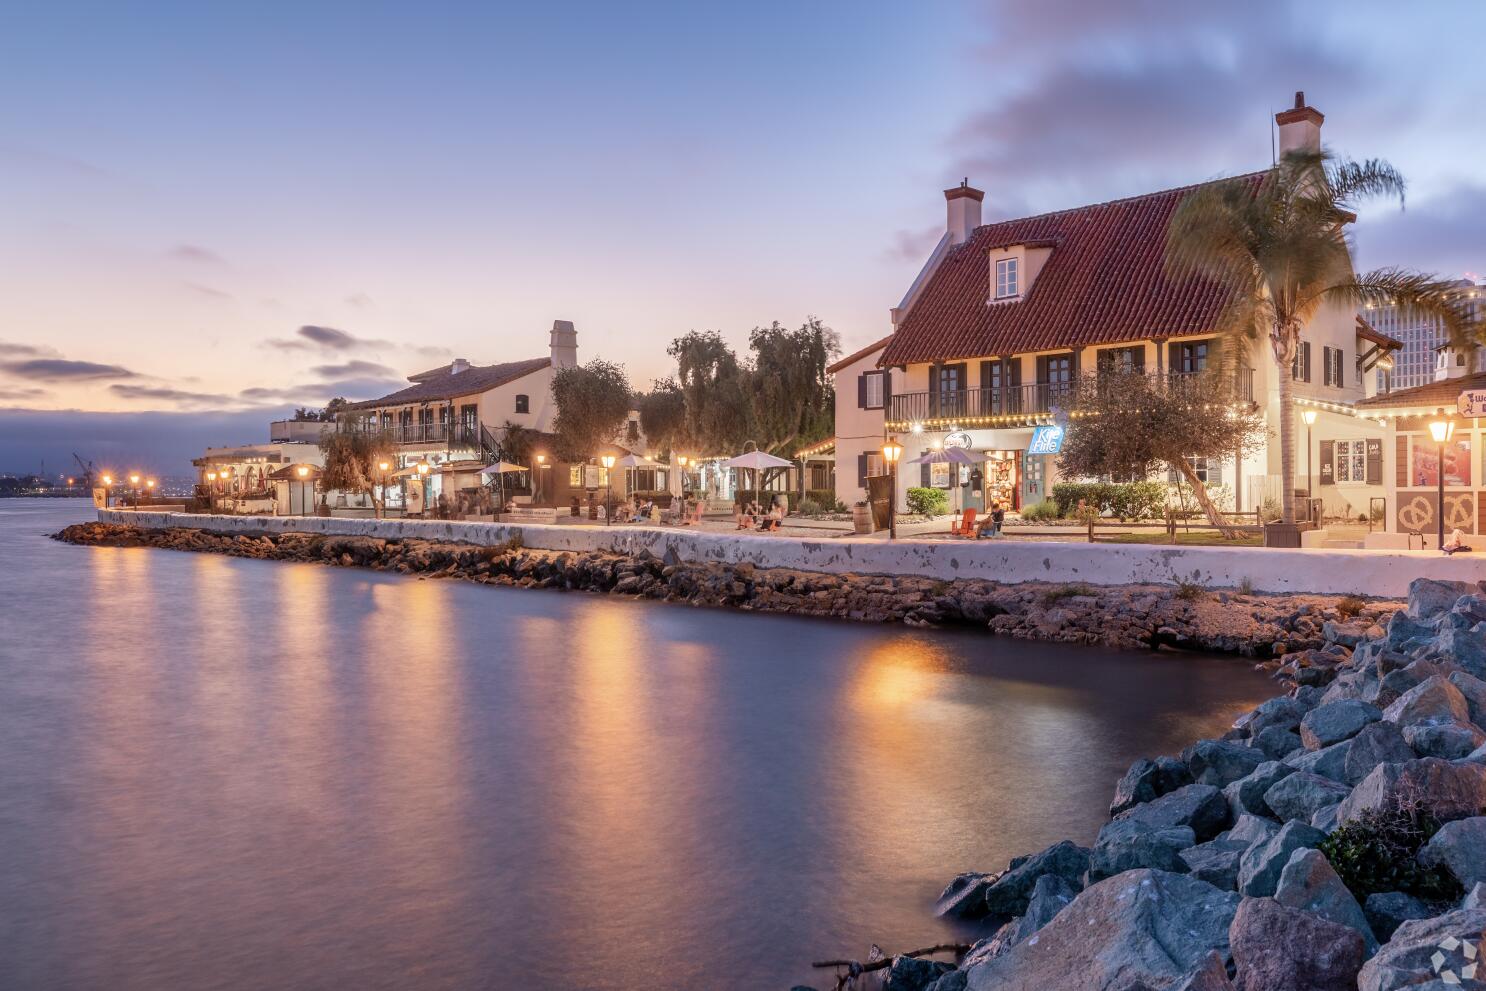 $3.6B plan to overhaul Seaport Village, surrounding waterfront